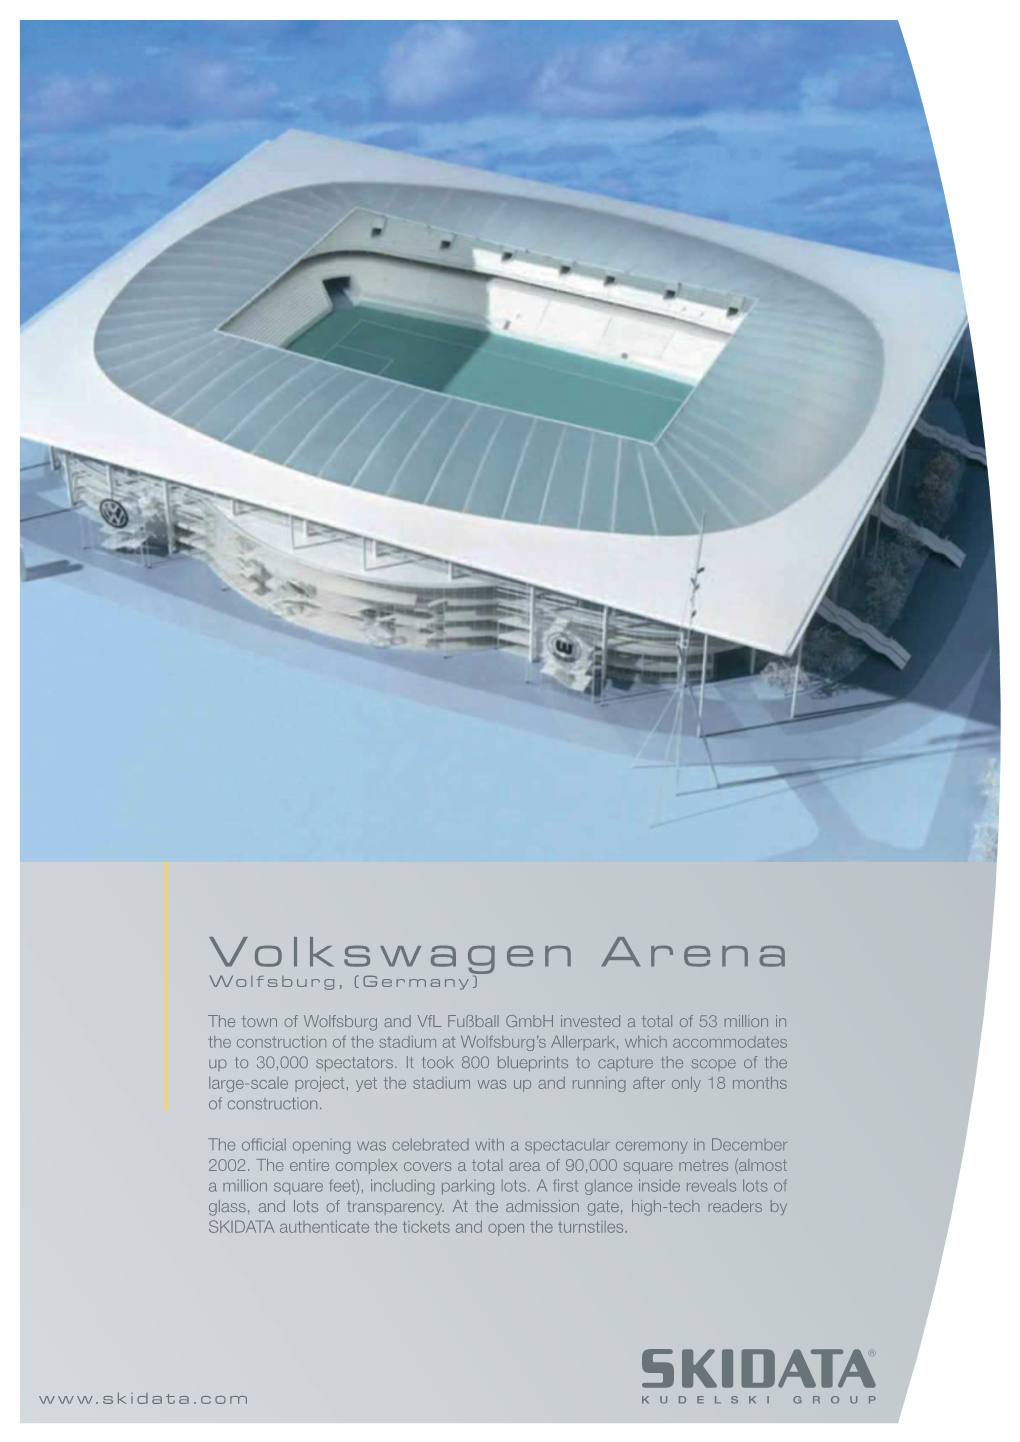 Volkswagen Arena Wolfsburg, (Germany)